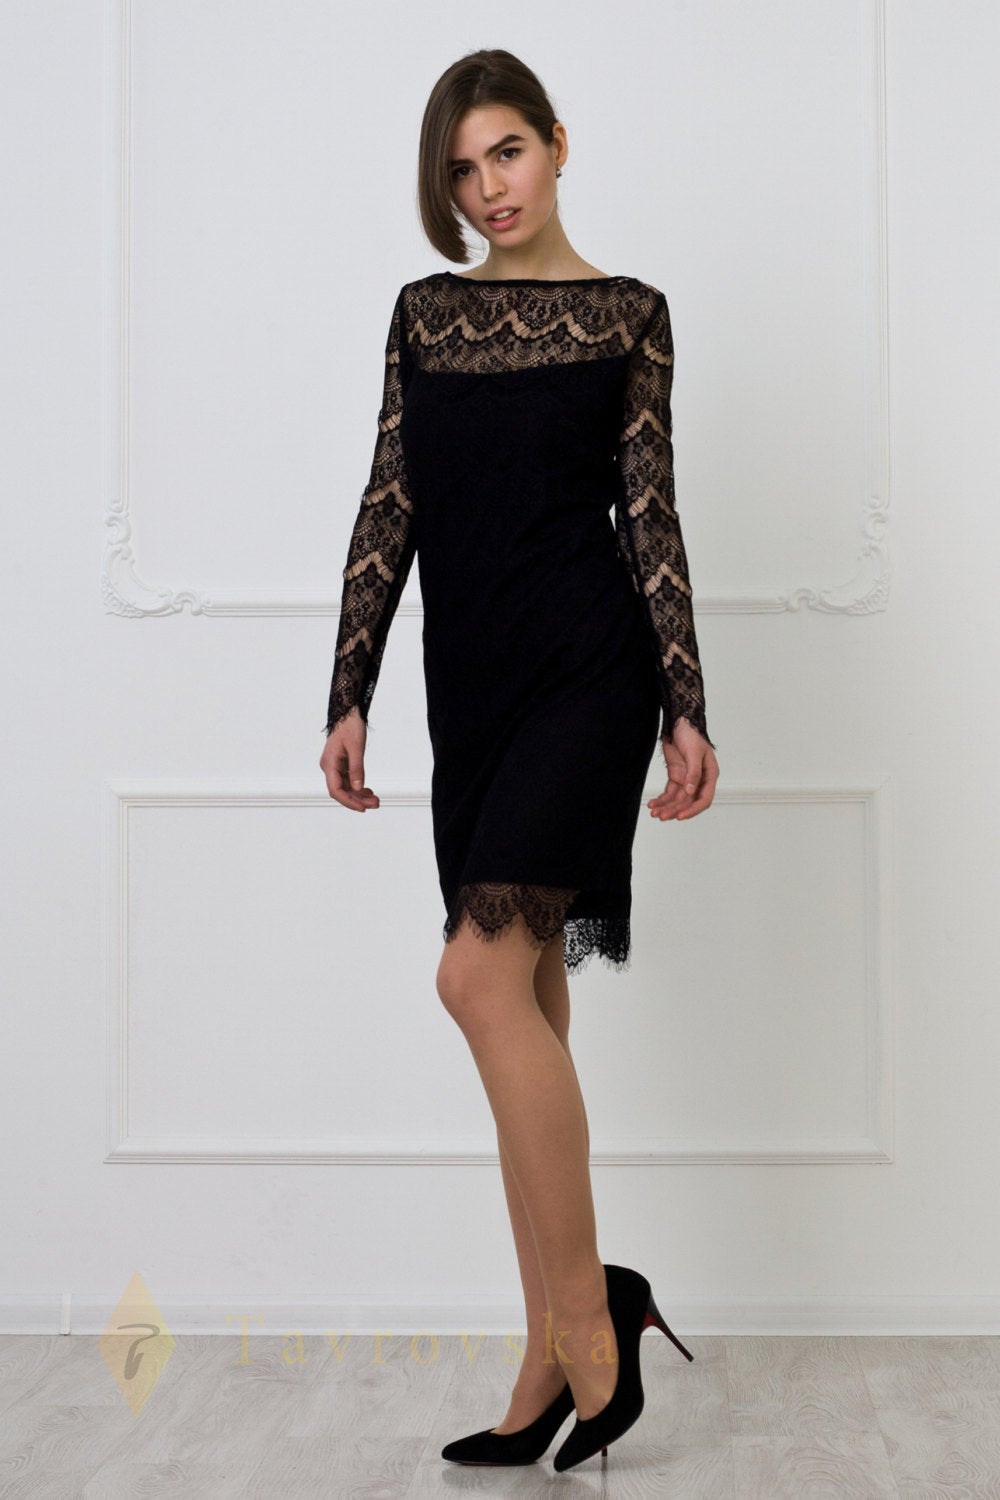 Black lace midi dress with scalloped edge